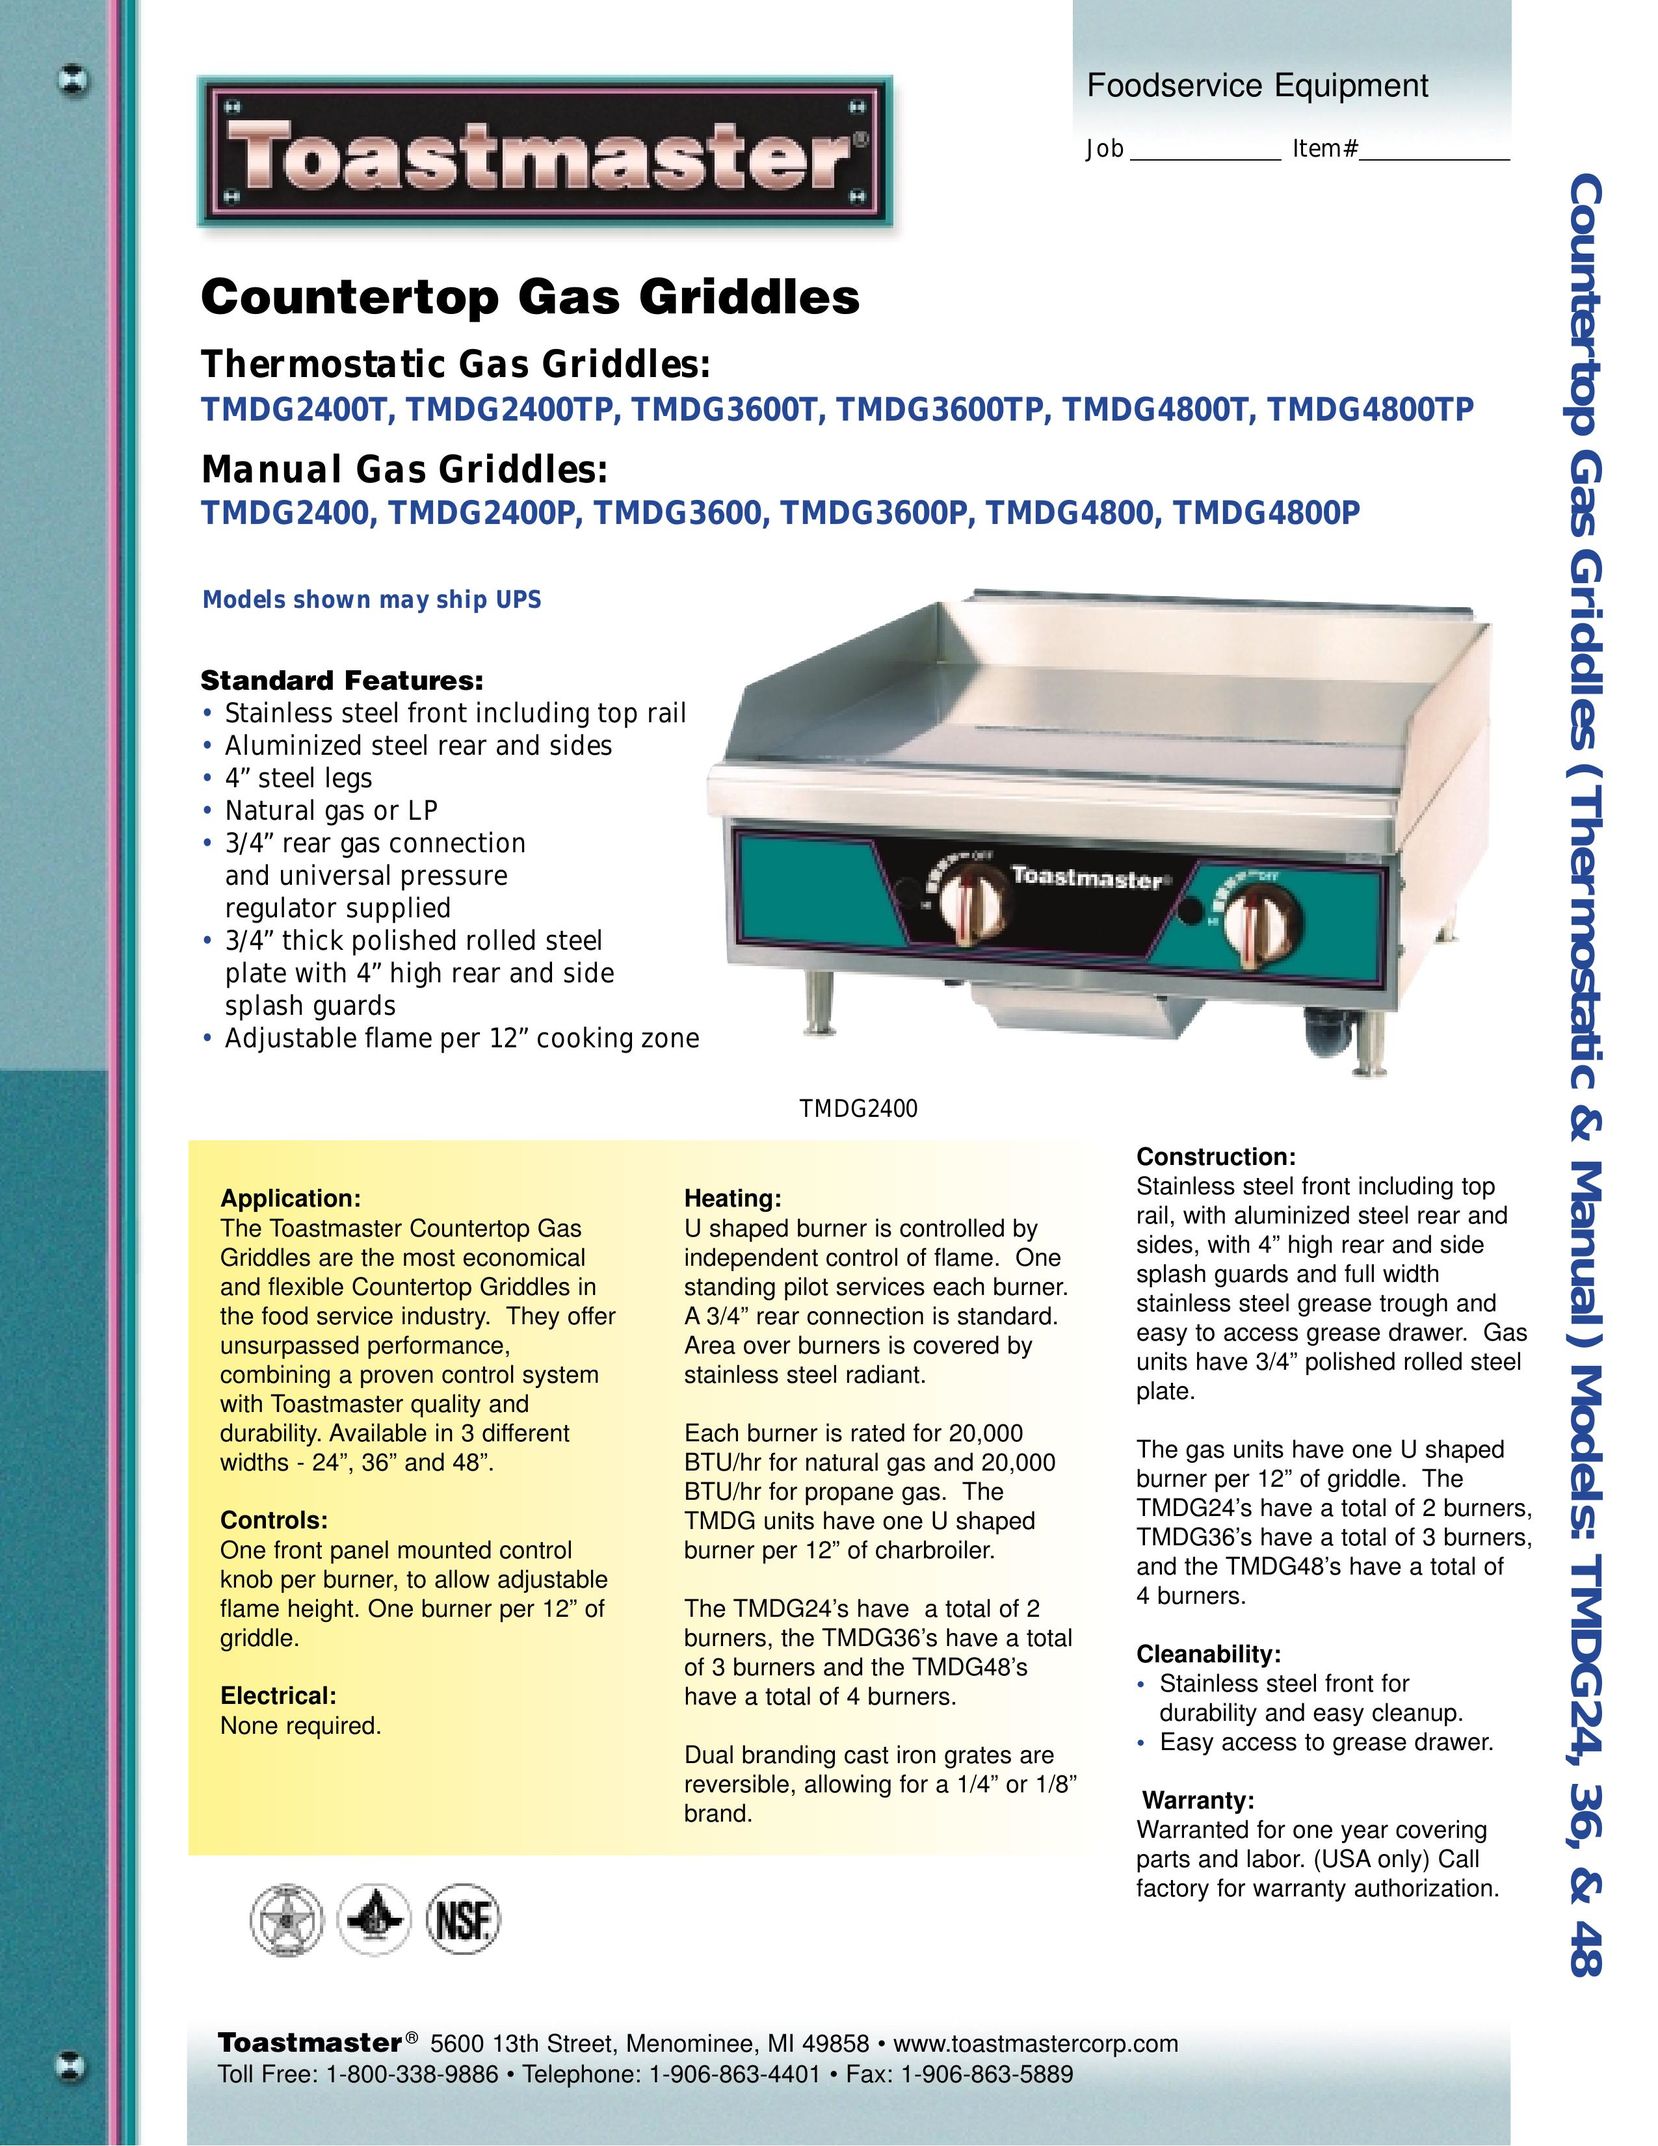 Toastmaster TMDG2400 Griddle User Manual